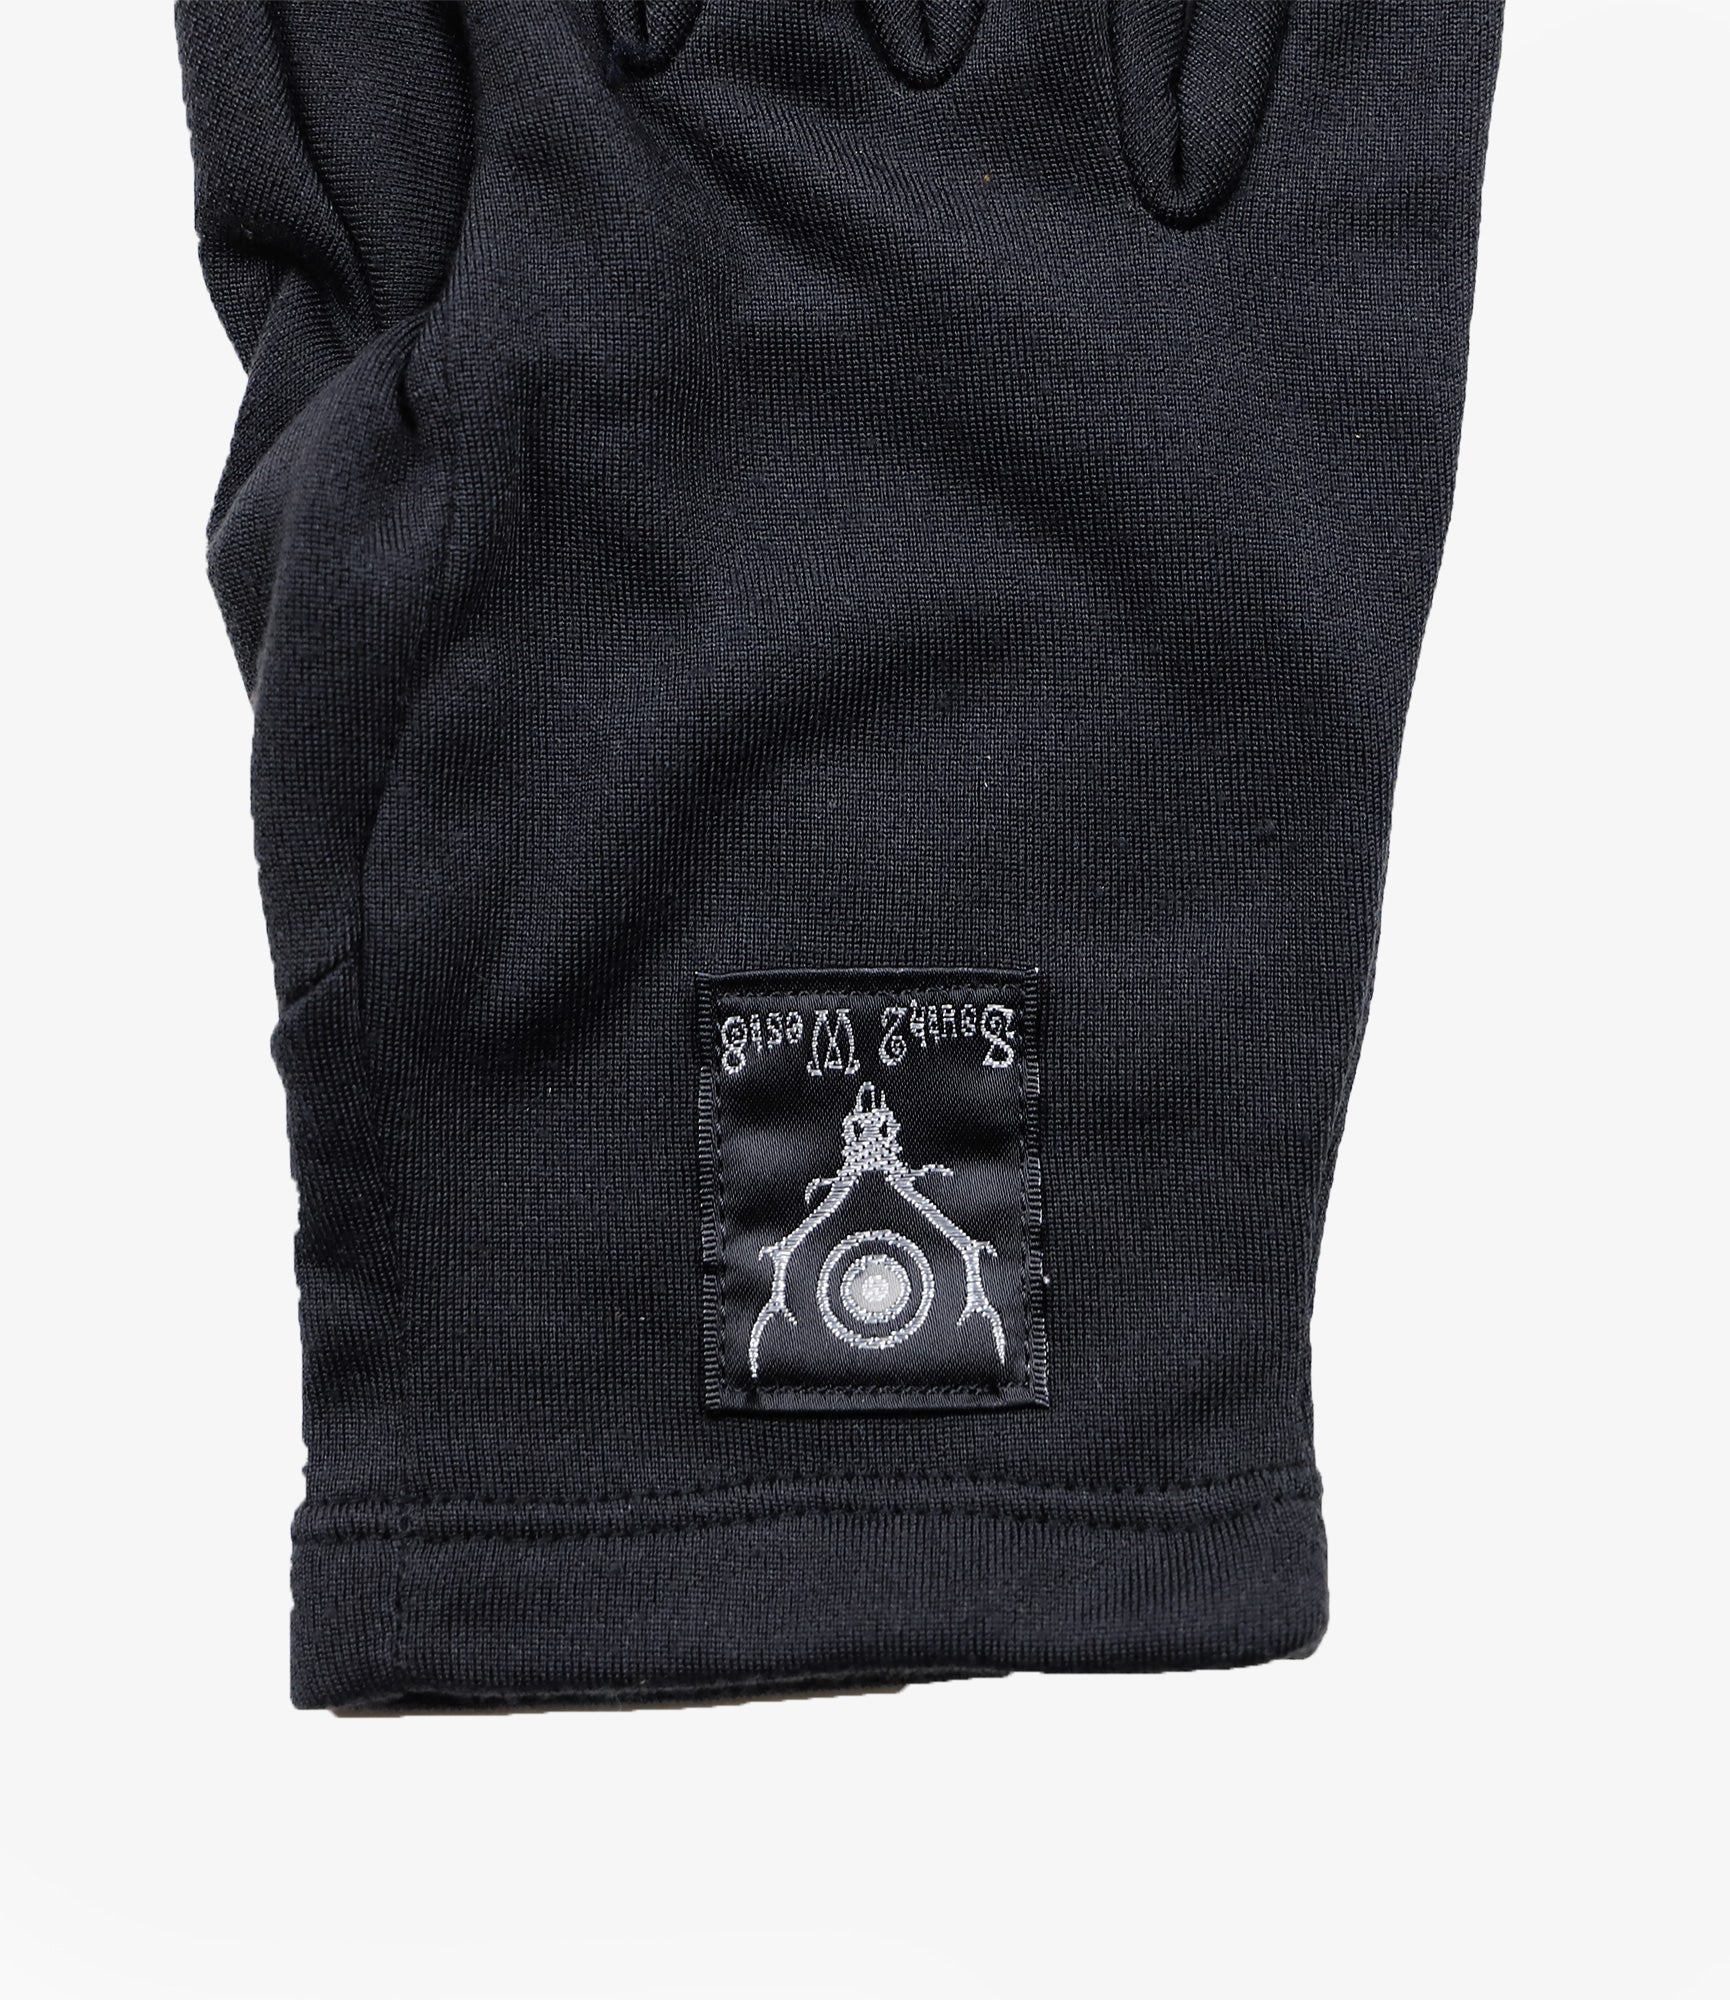 South2 West8 Inner Glove - Poly Fleece - Black